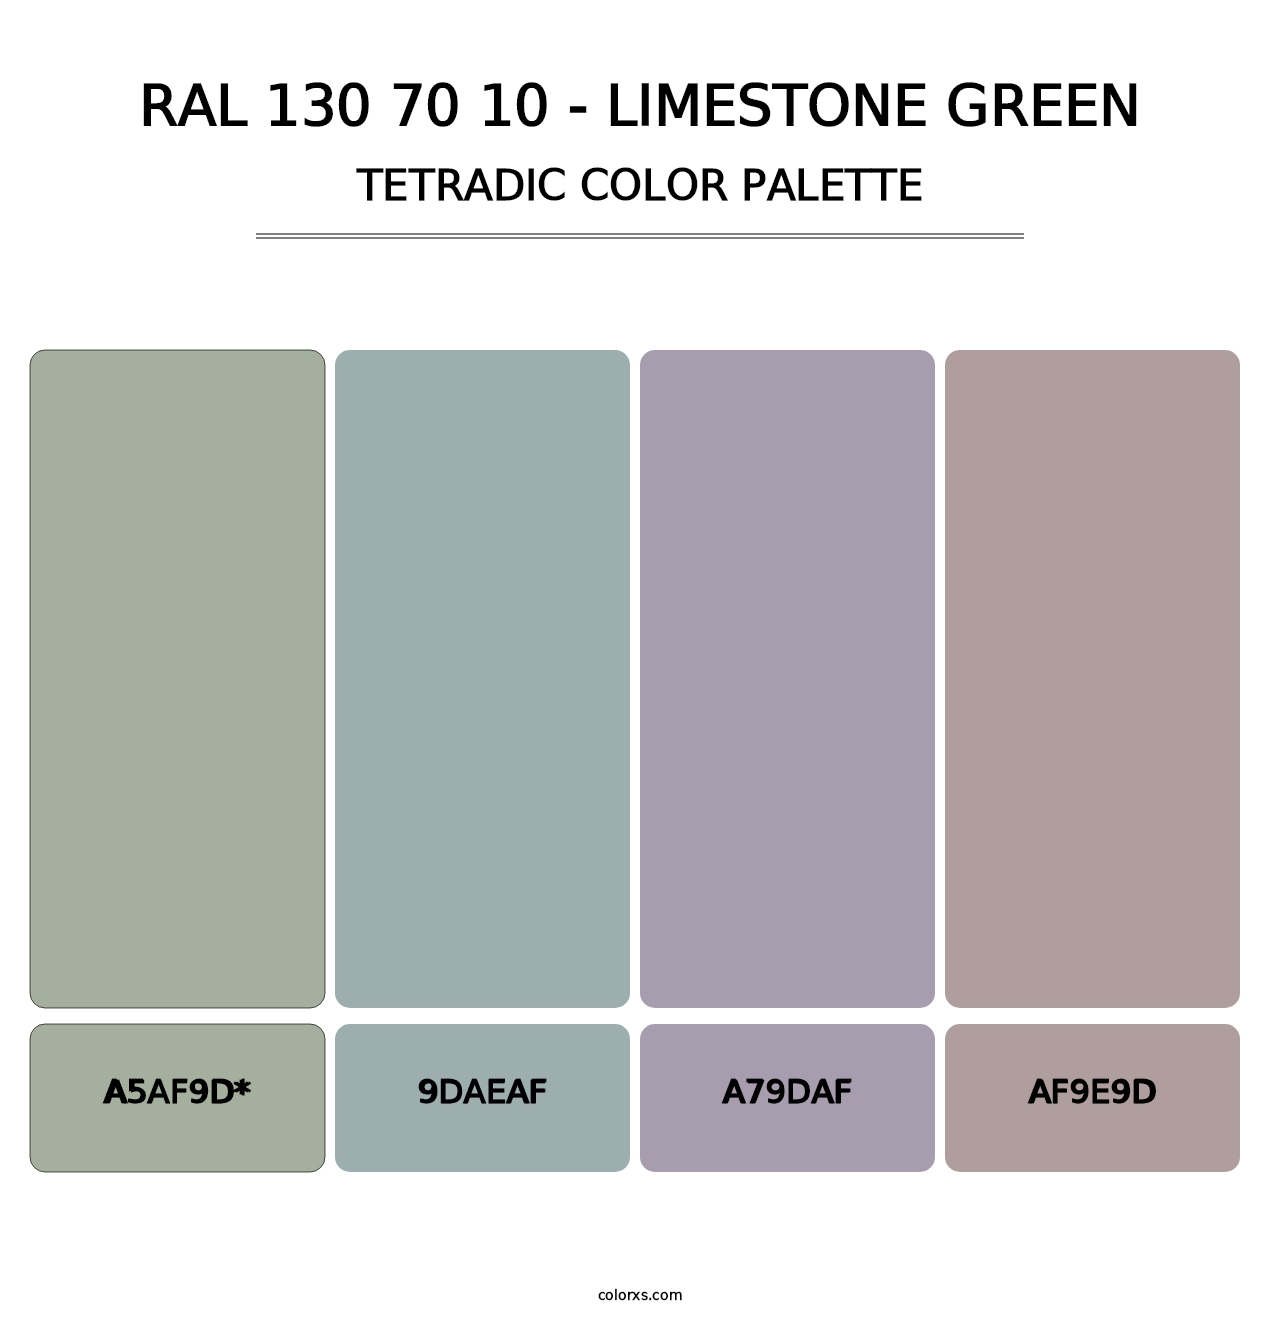 RAL 130 70 10 - Limestone Green - Tetradic Color Palette